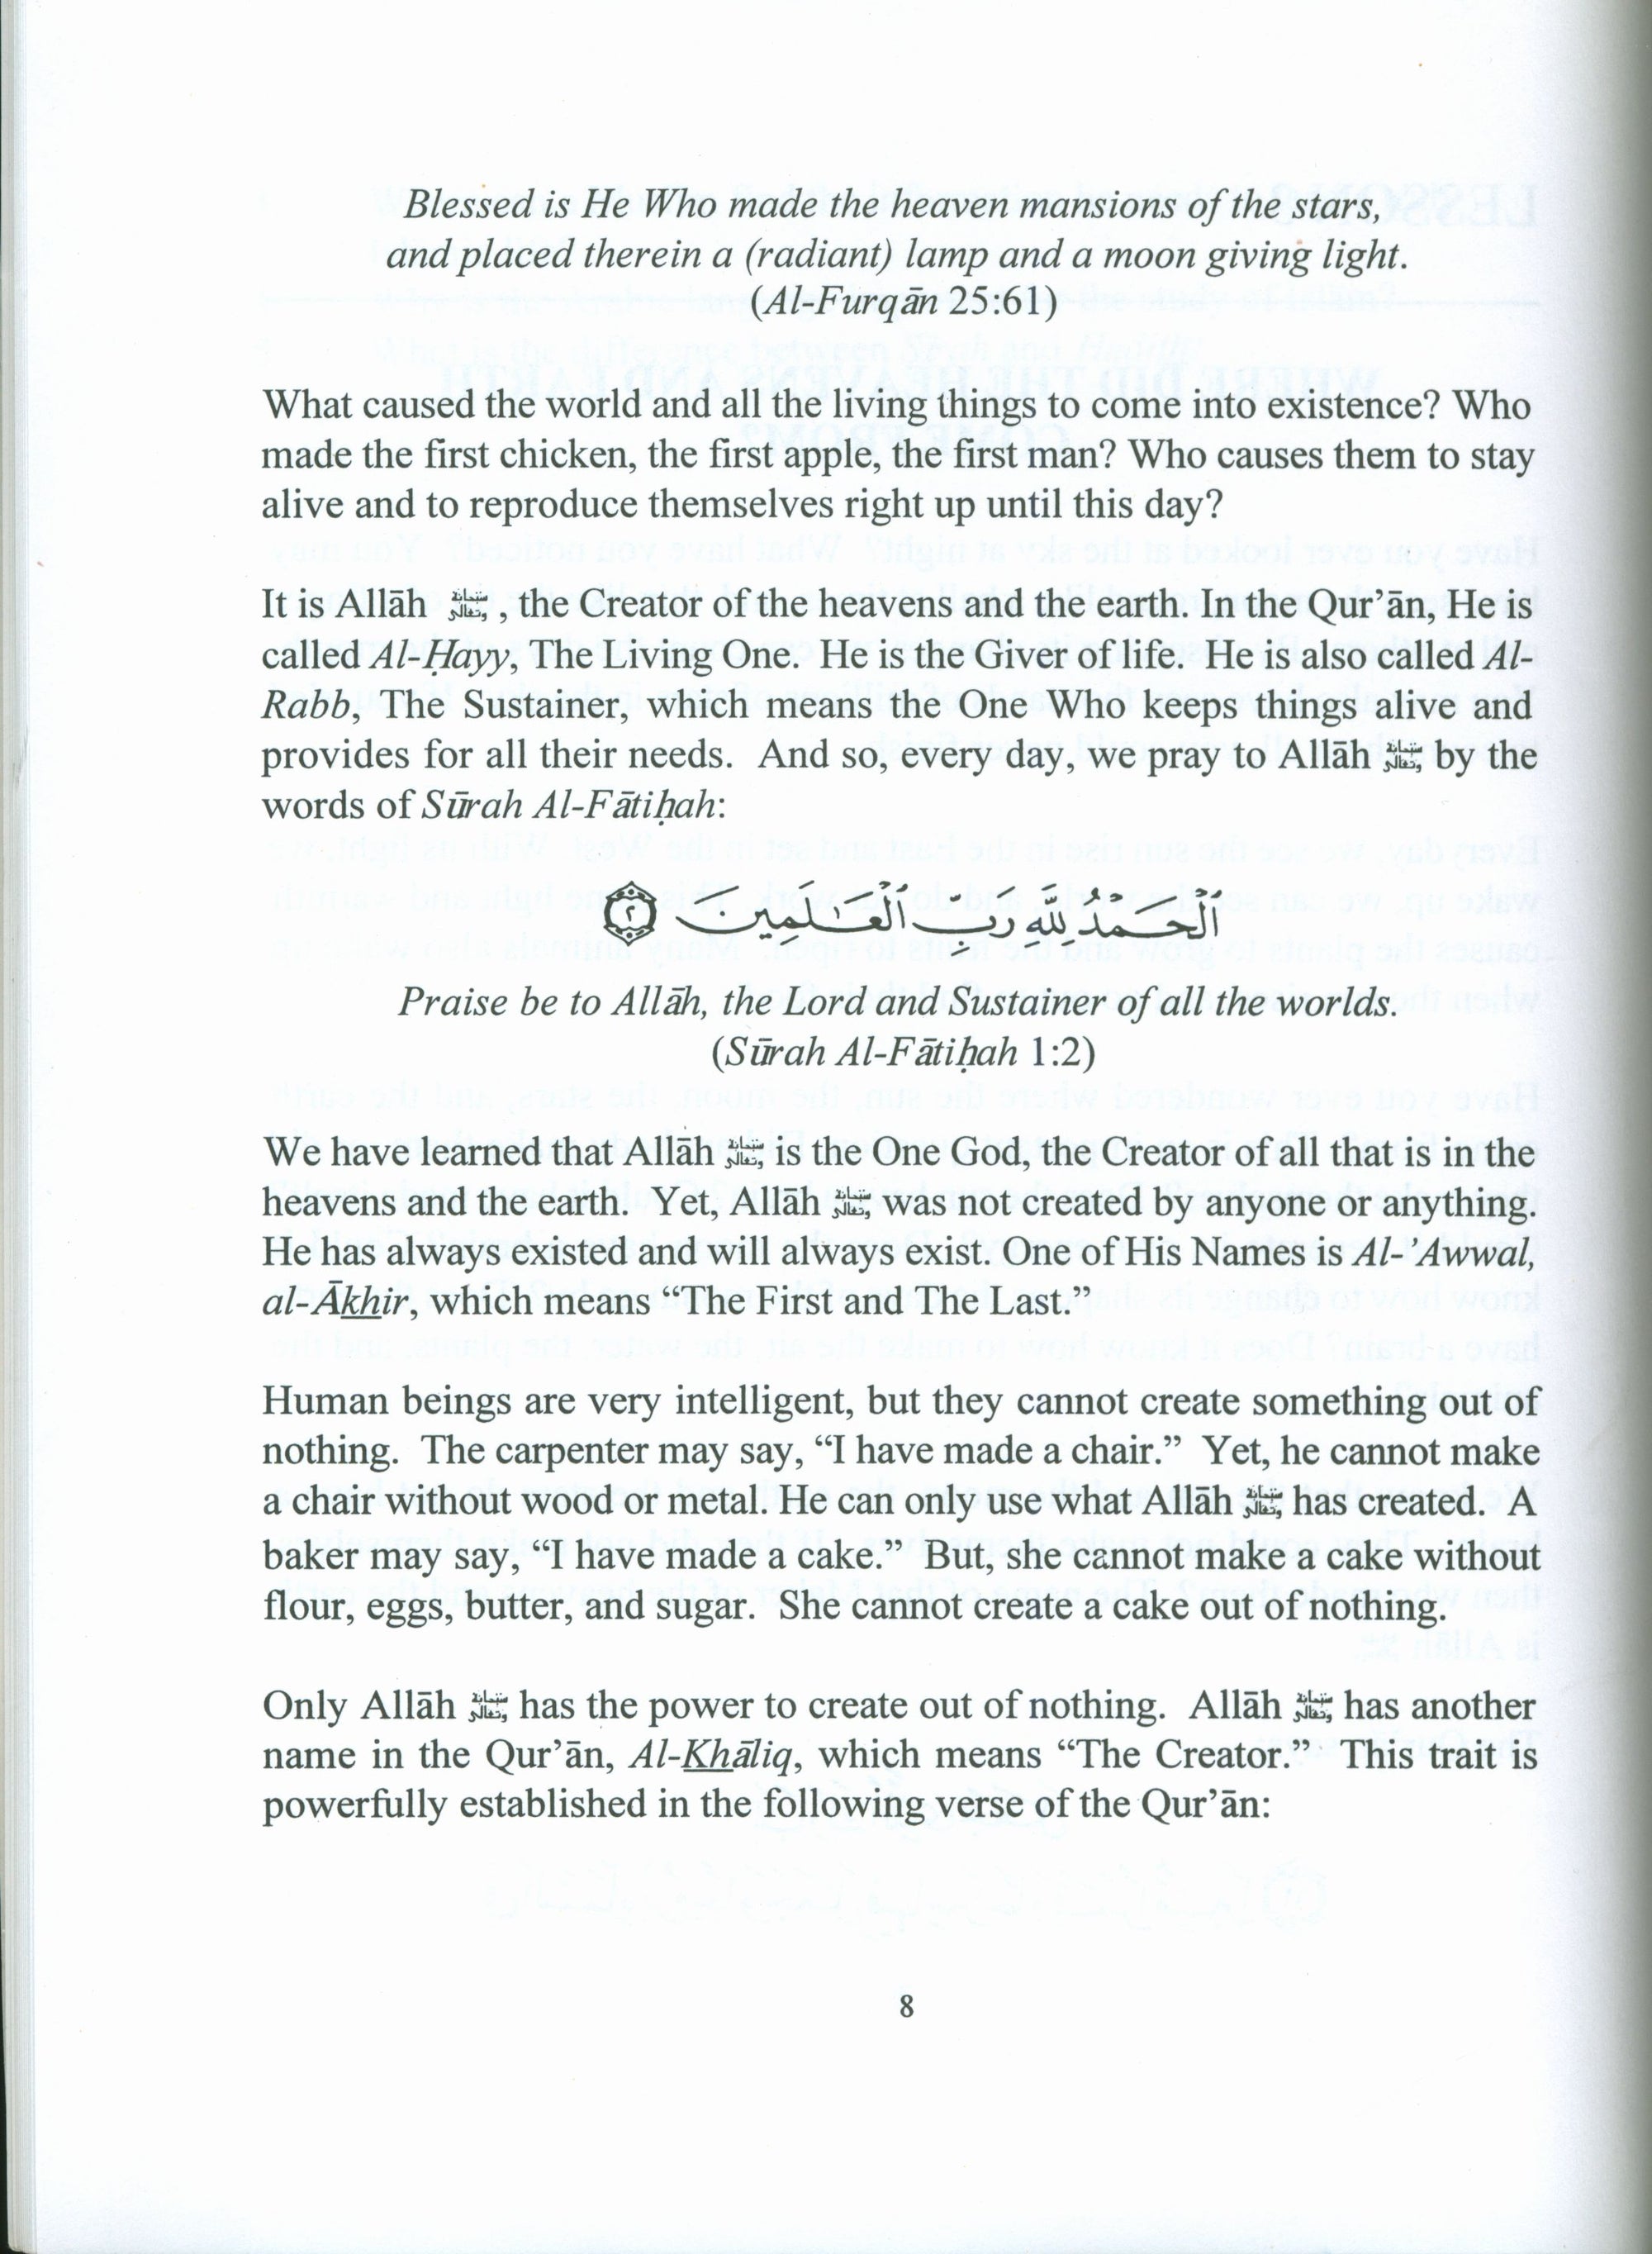 Islamic Aqidah and Fiqh